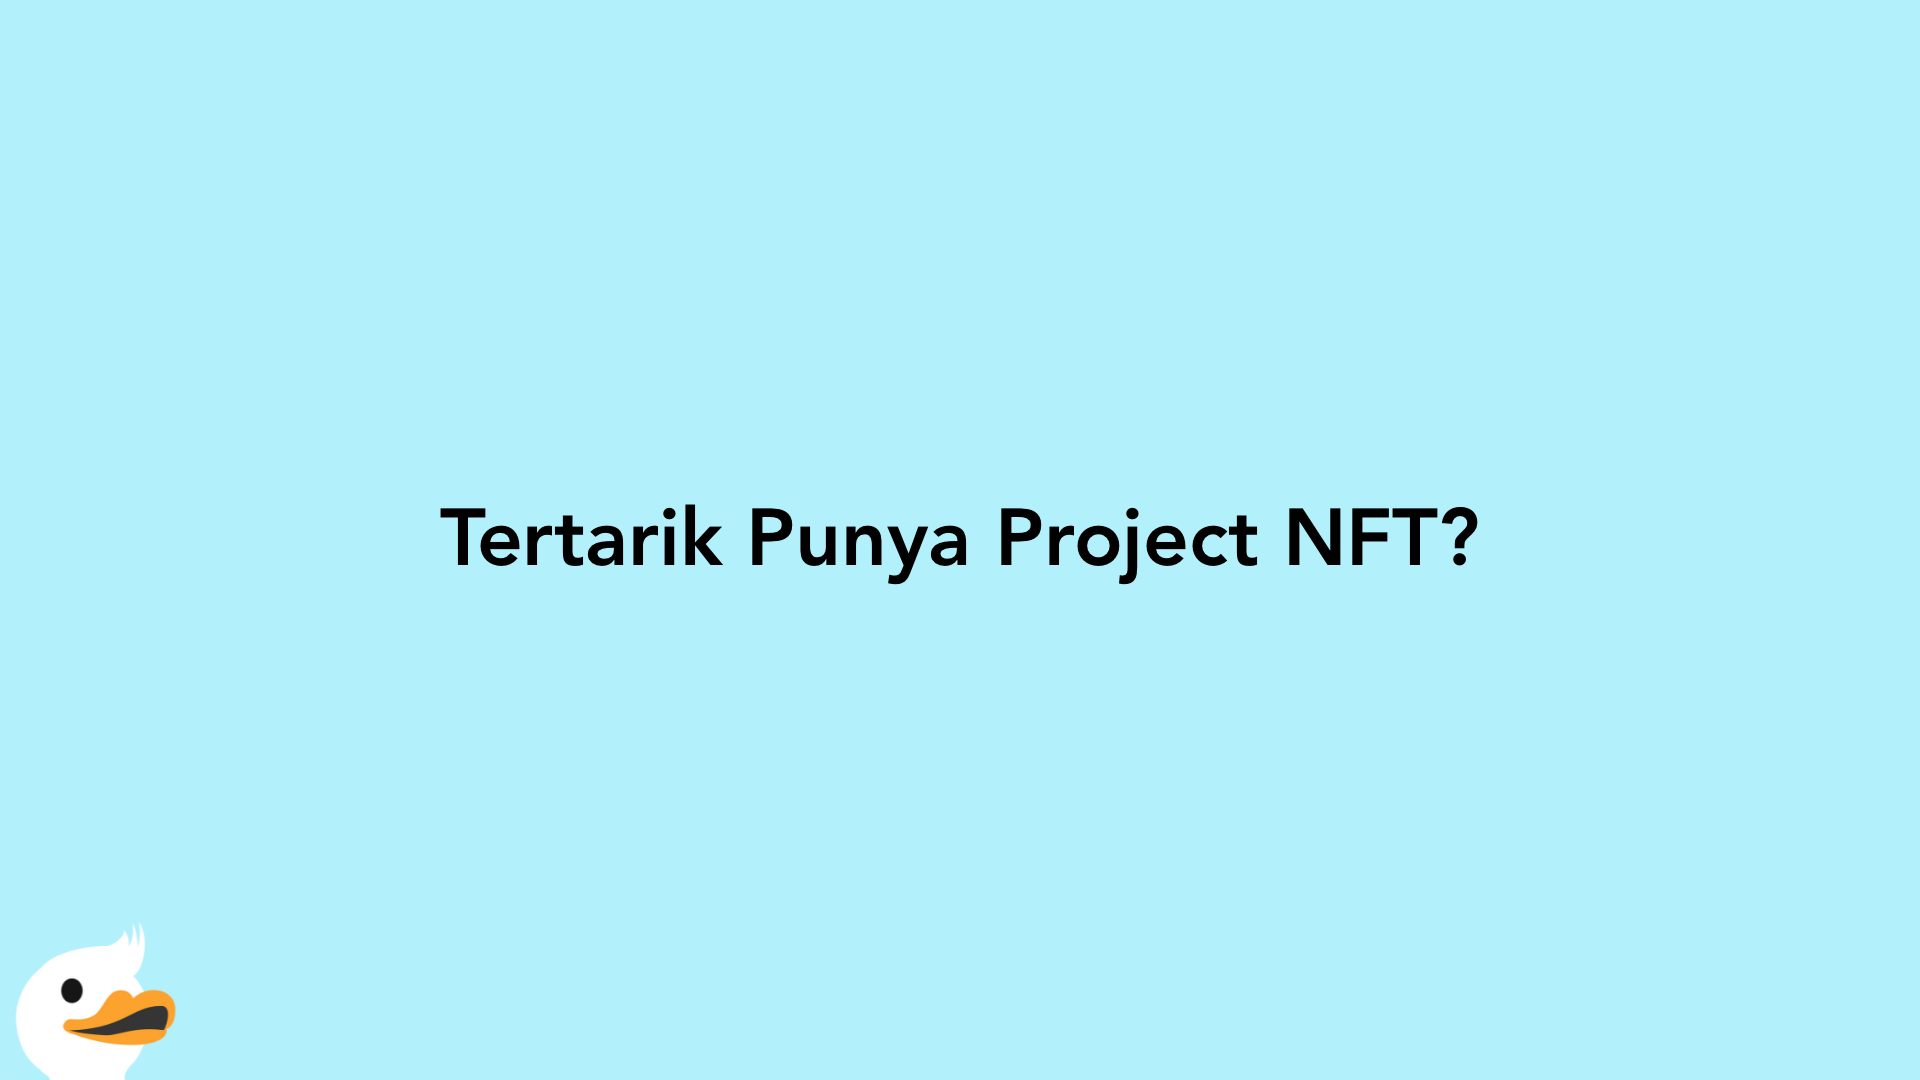 Tertarik Punya Project NFT?